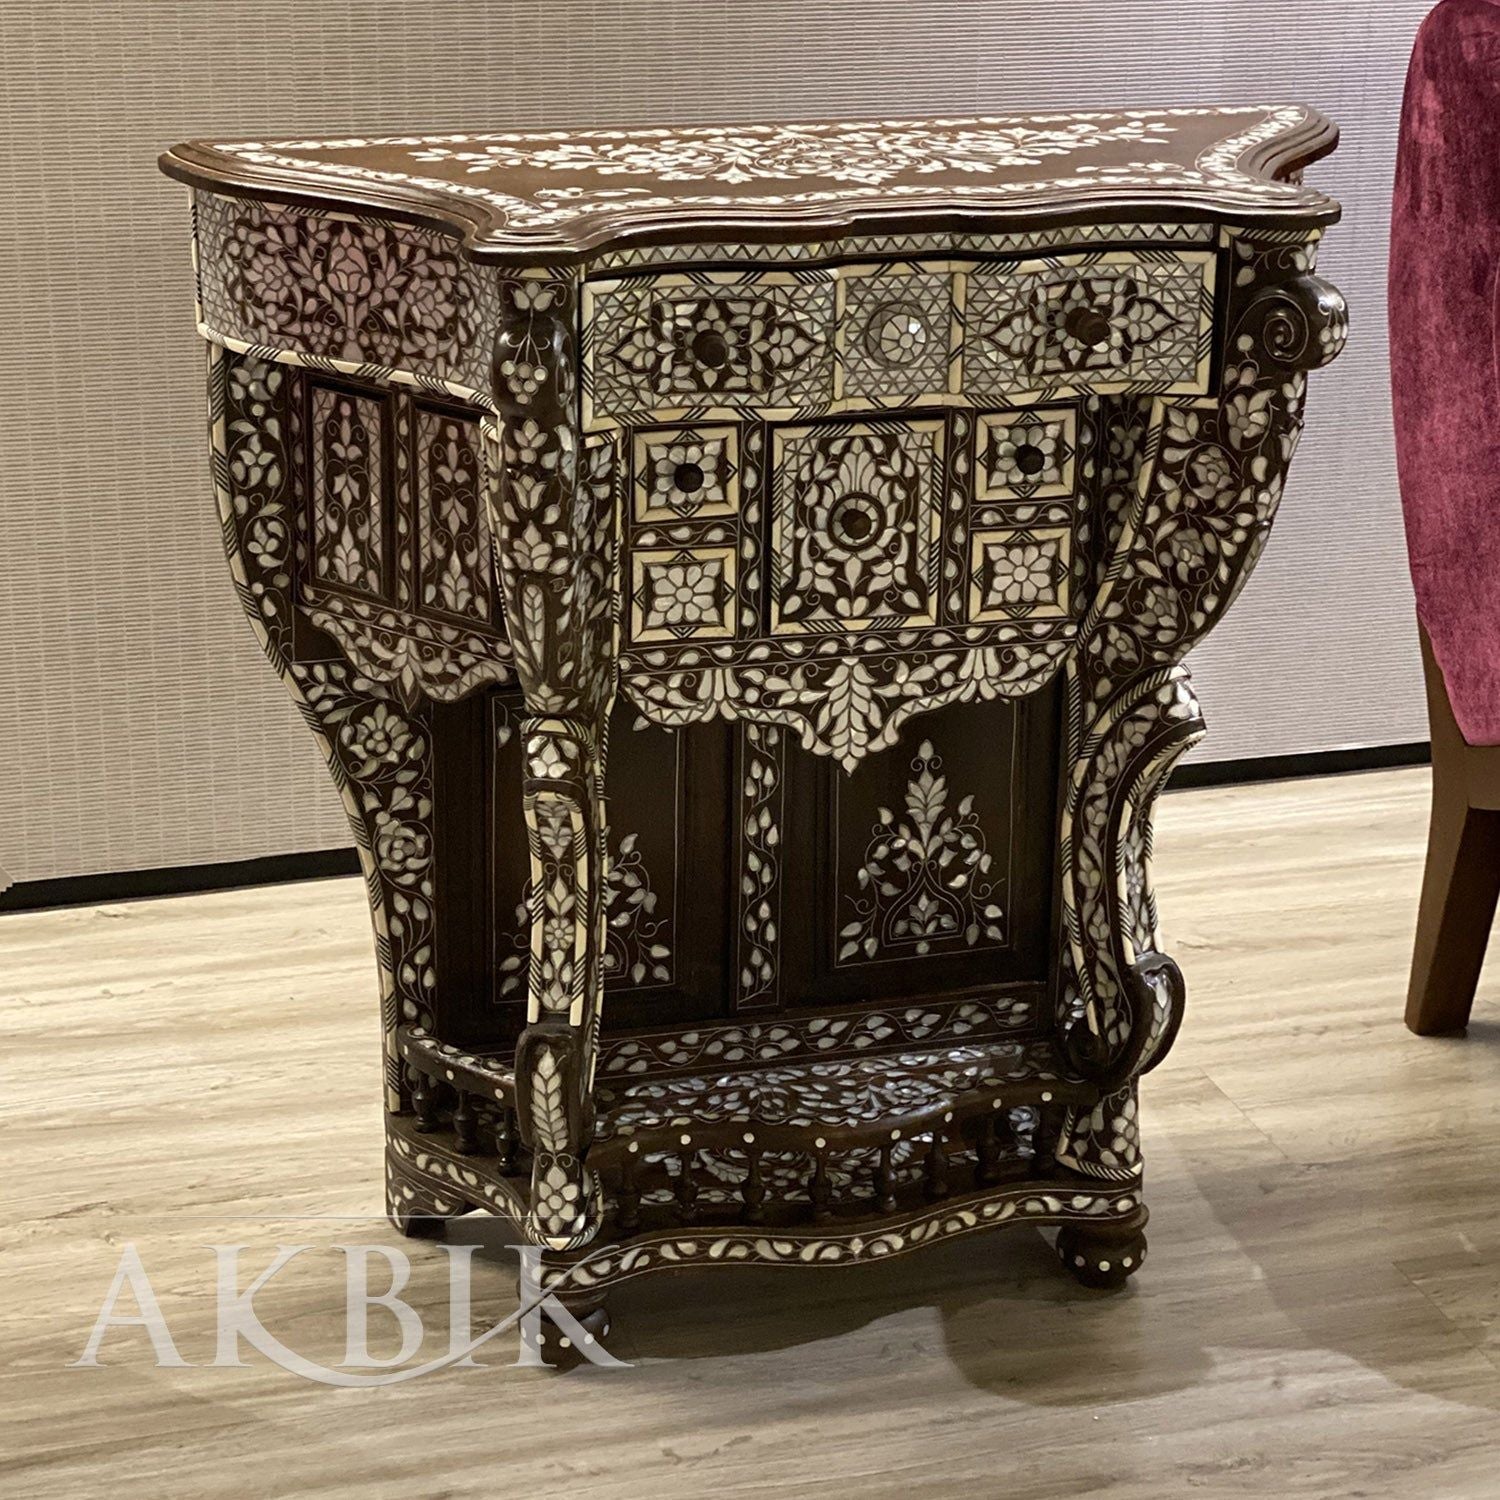 BEACH OF PEARLS CONSOLE TABLE - AKBIK Furniture & Design